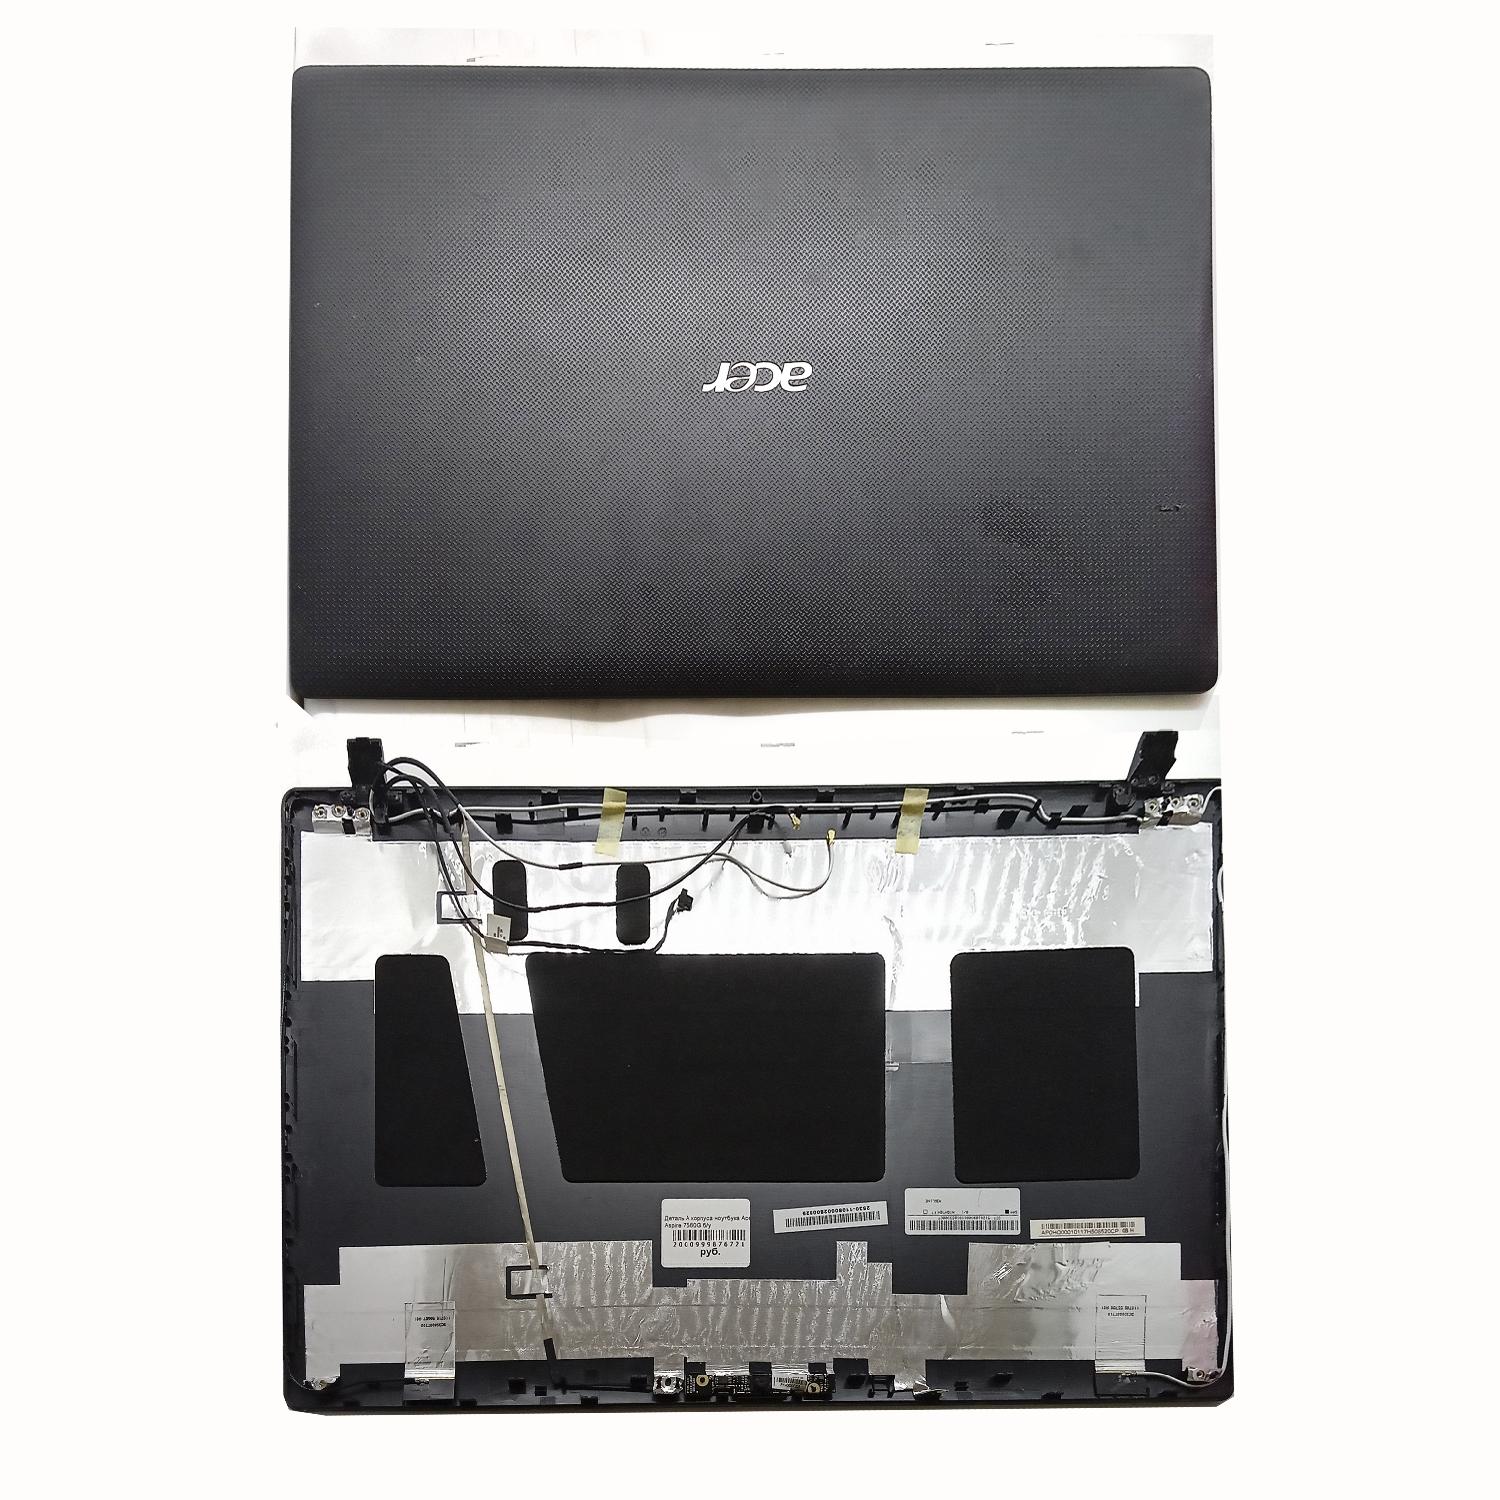 Деталь A корпуса ноутбука Acer Aspire 7560G б/у